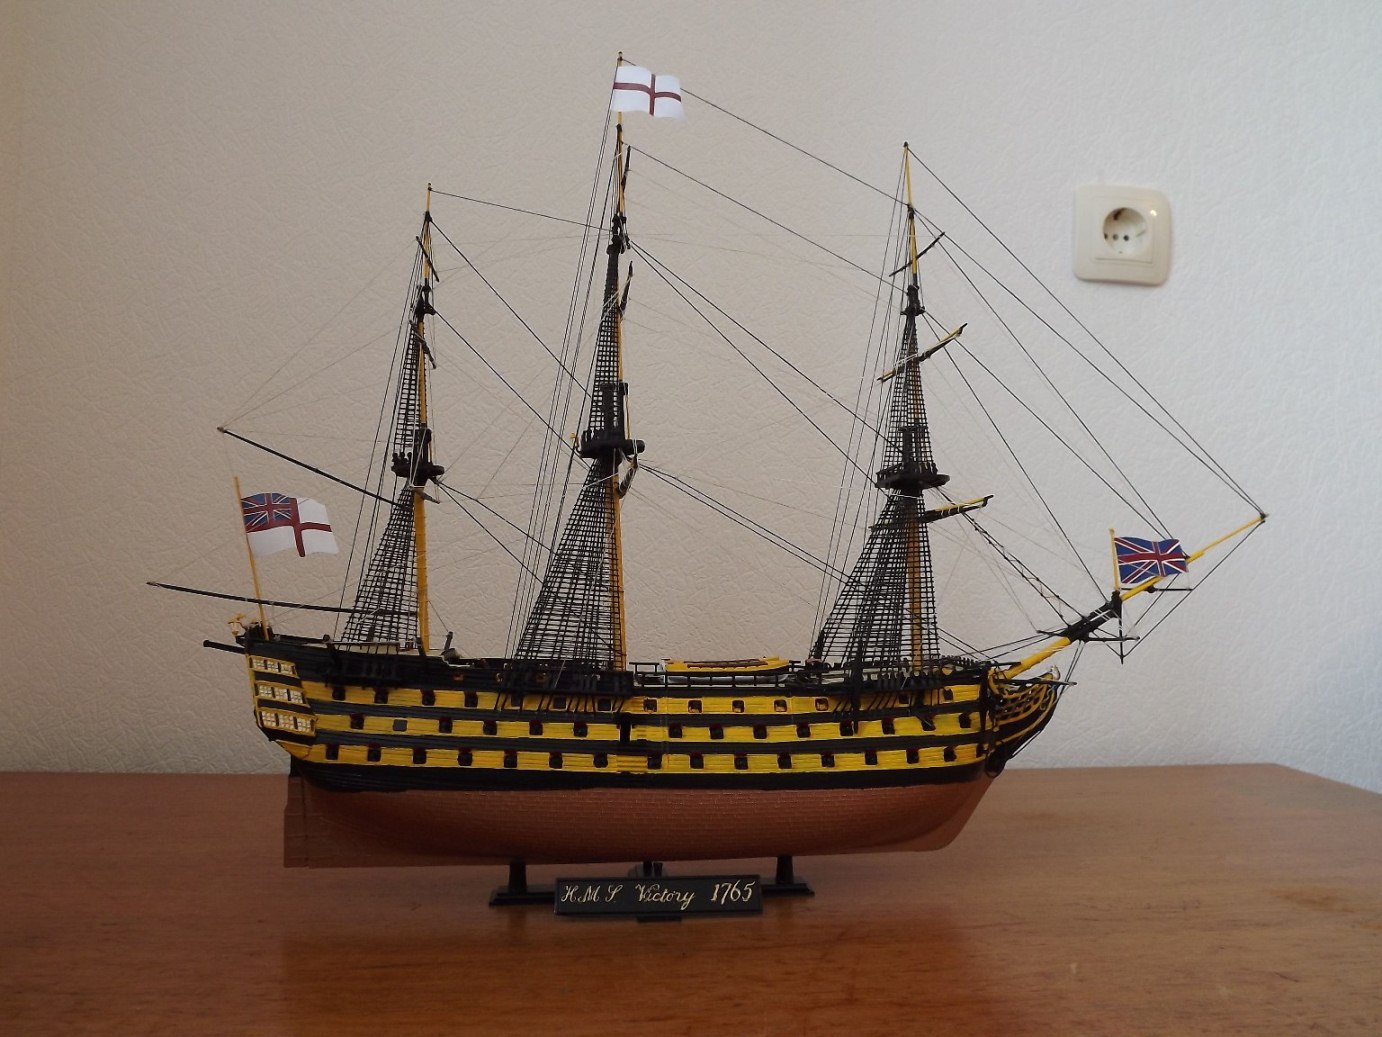 Флагманский корабль адмирала Нельсона "Виктори"